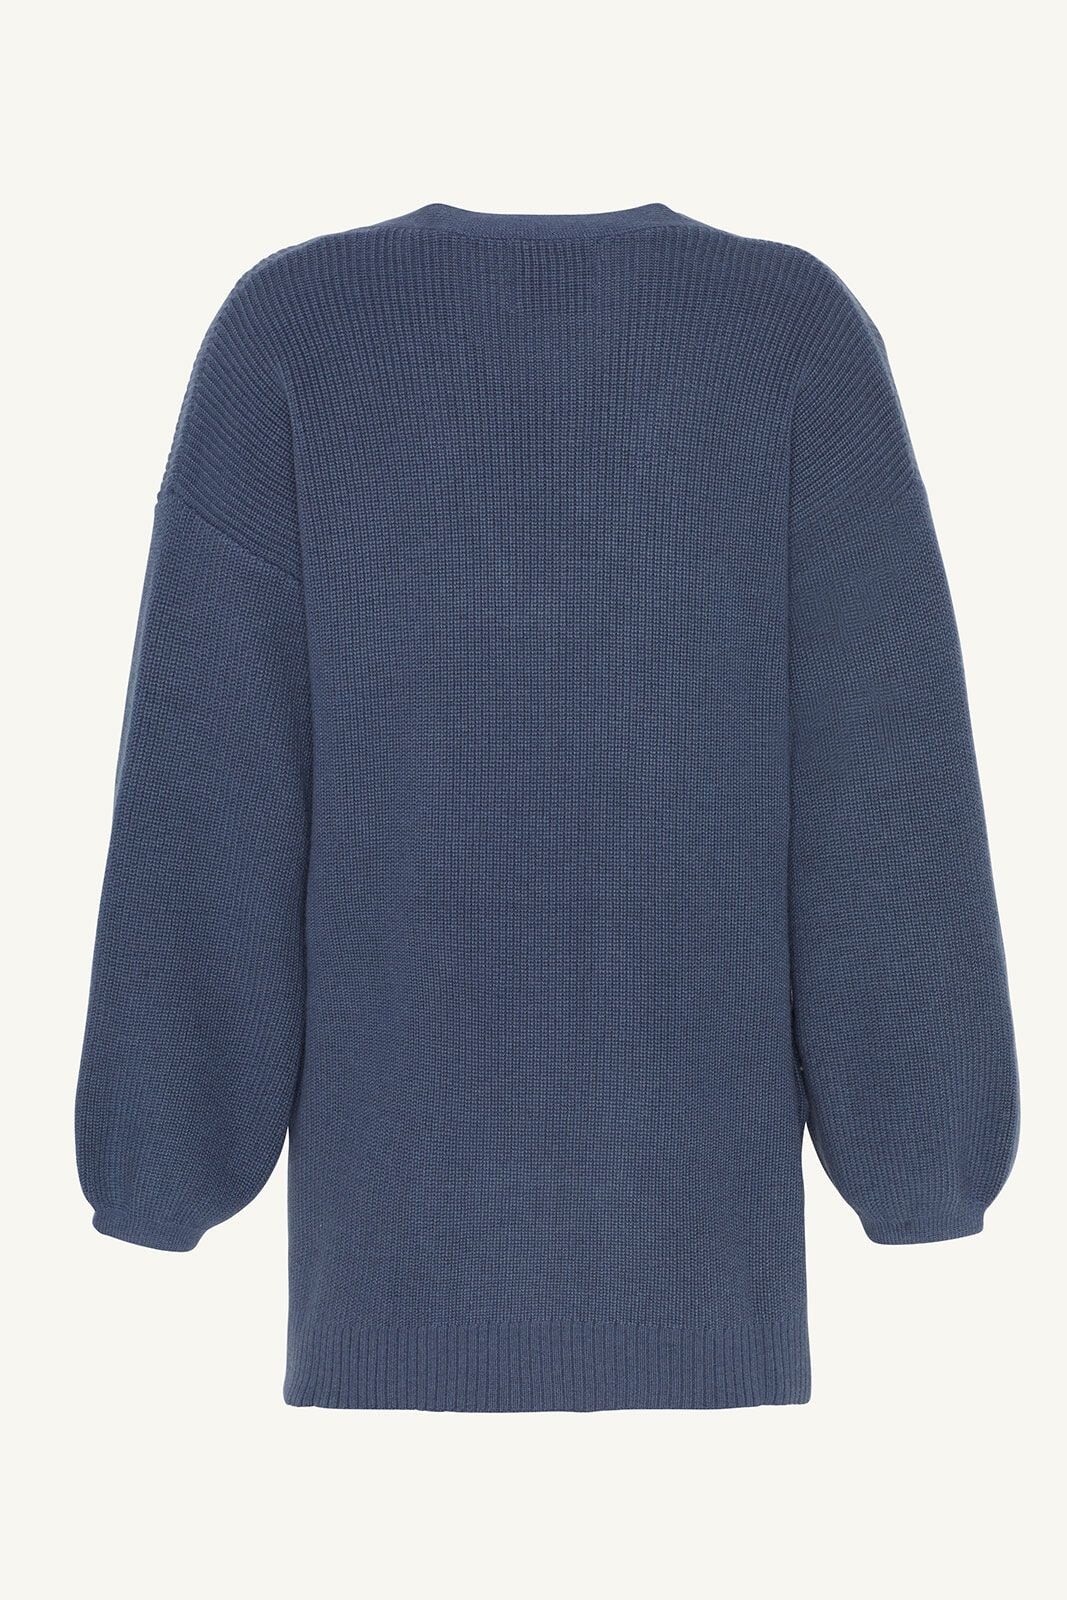 Merino Wool Balloon Sleeve Knit Cardigan - Denim Blue Clothing epschoolboard 